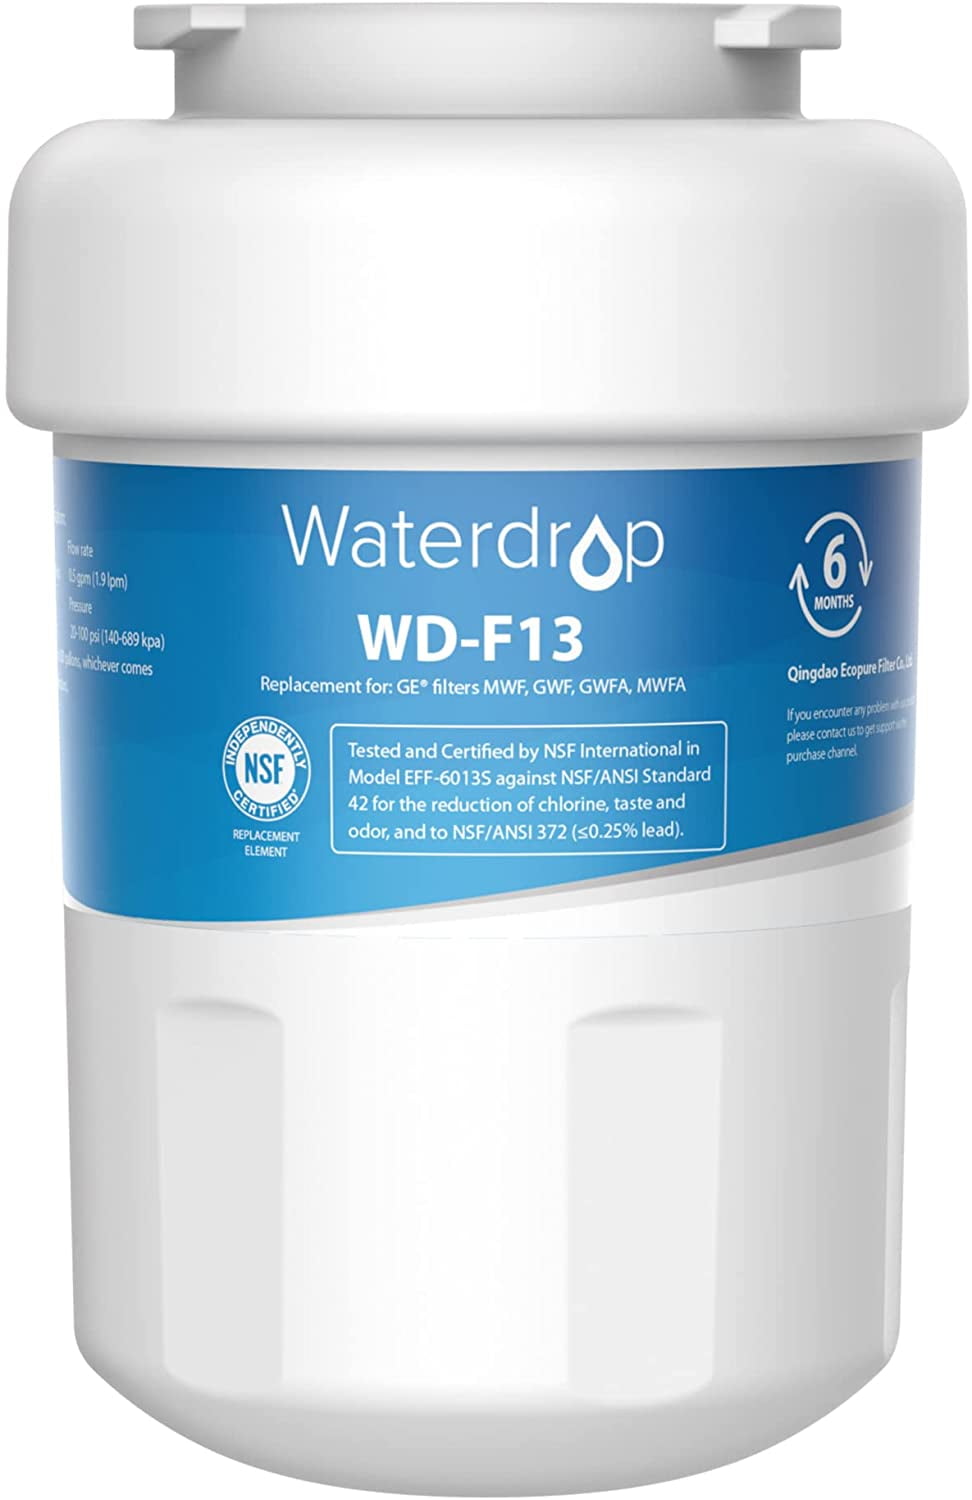 MWF GWF06 /GWF01 NEW! GE Smart Water Refrigerator Water Filter GWF 